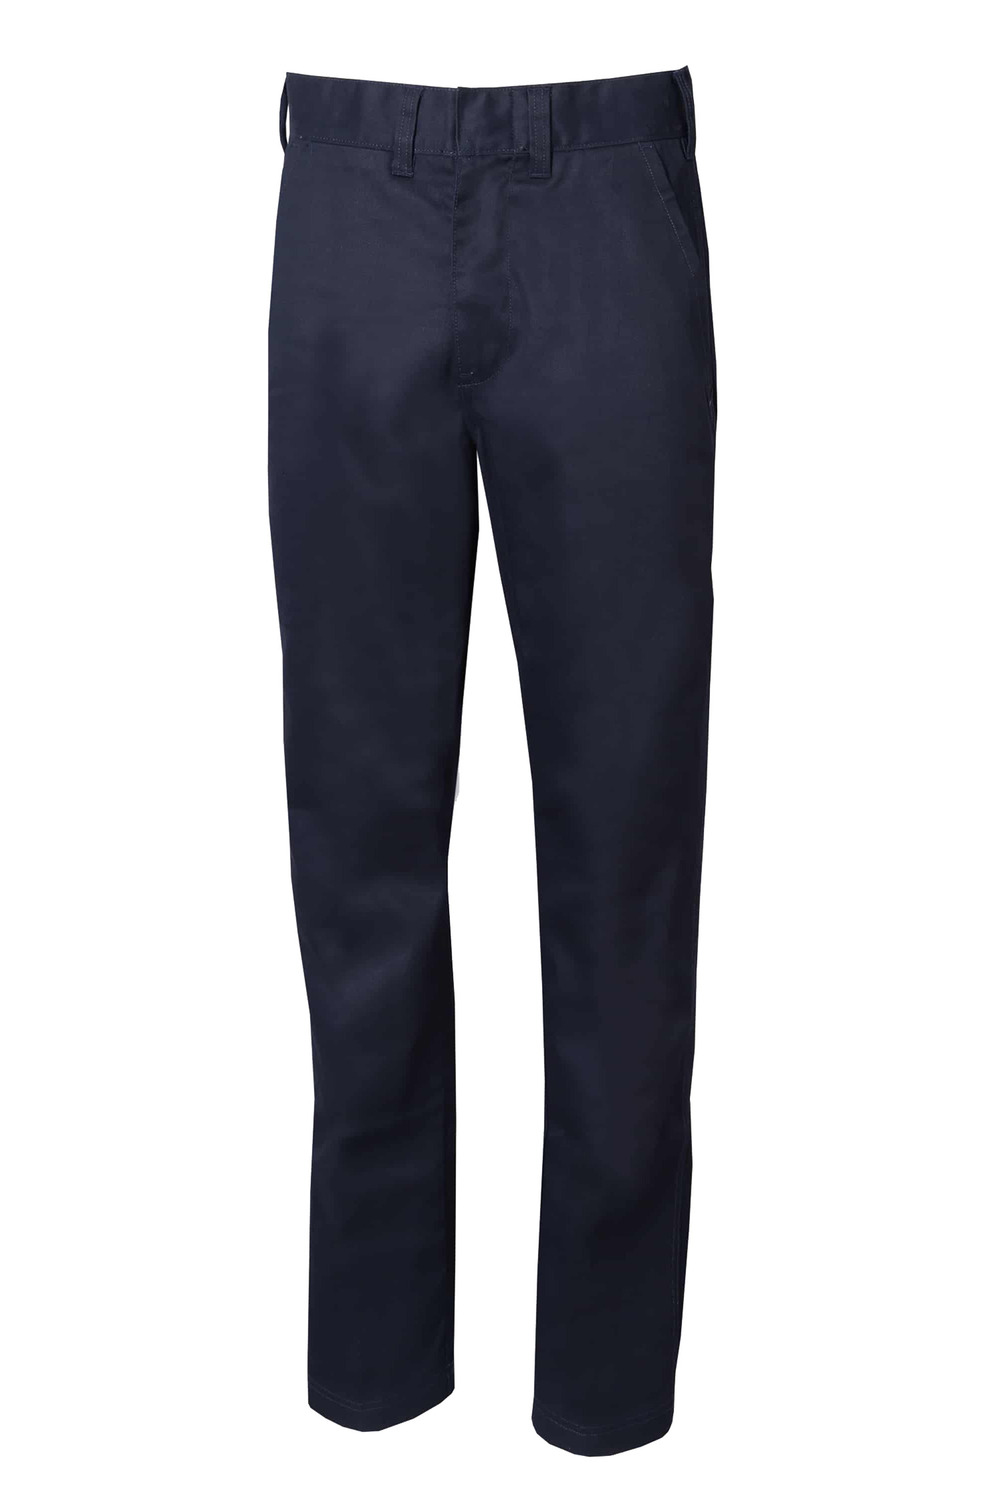 Jackfield - Work pants, navy blue, 34/32